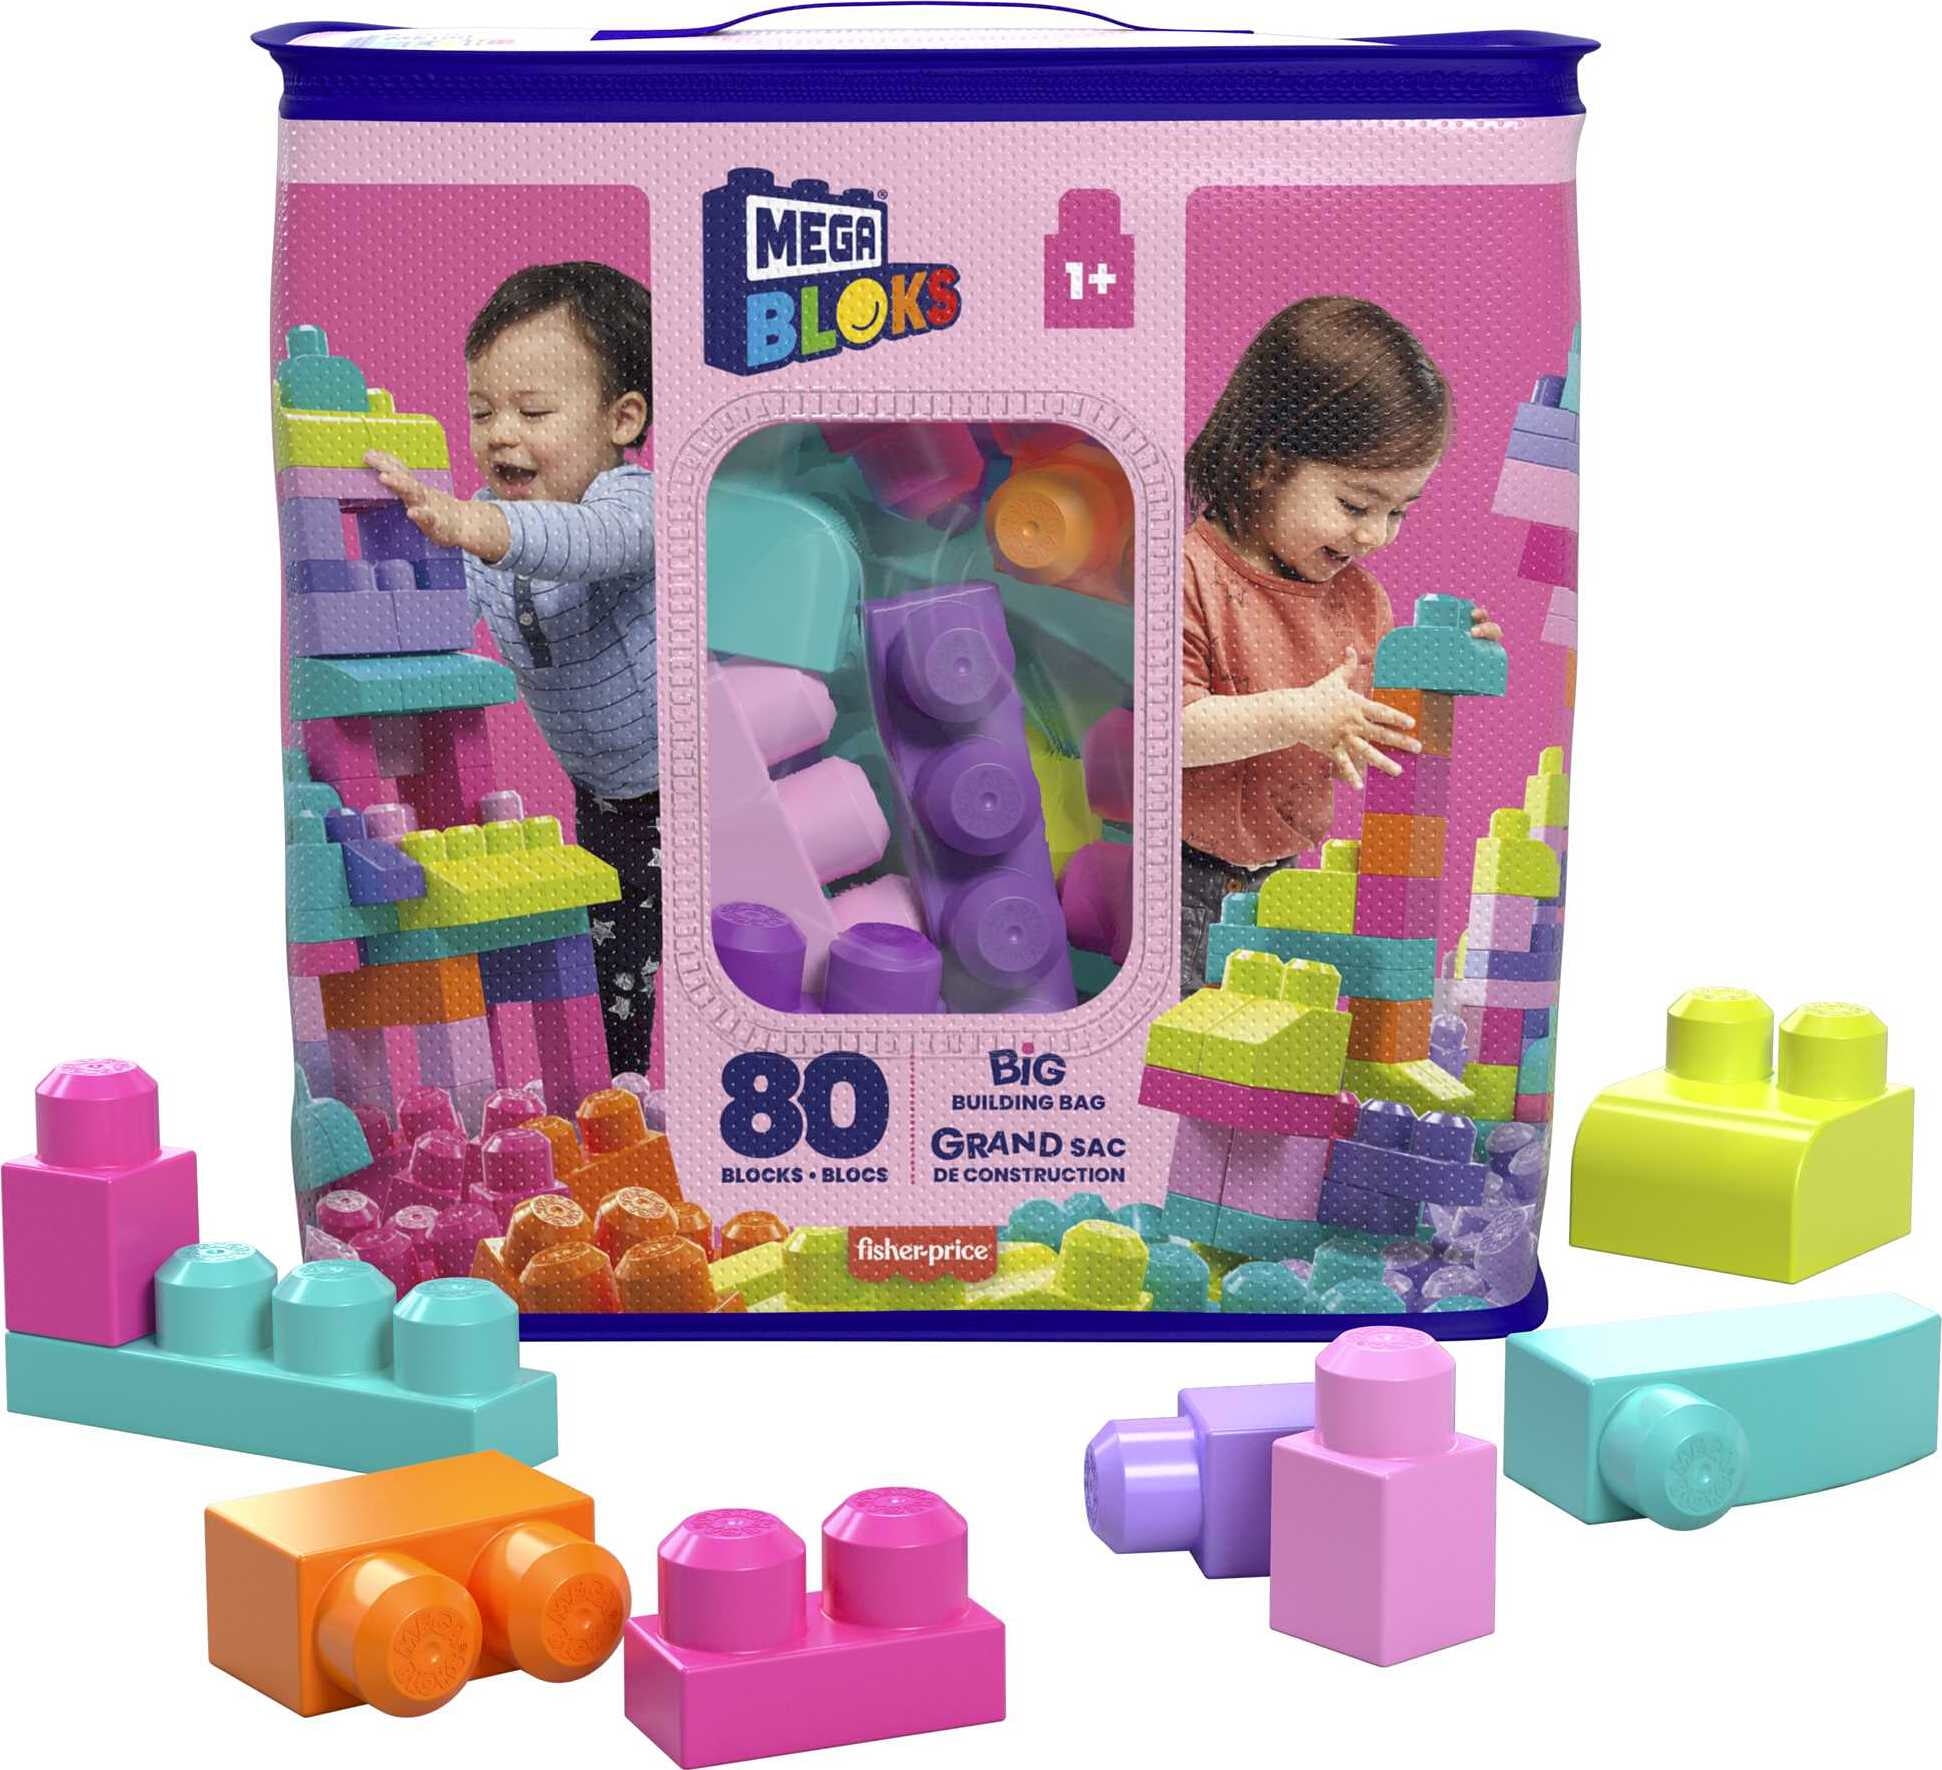 MEGA BLOKS Fisher-Price Toy Blocks Pink Big Building Bag with Storage (80 Pieces) for Toddler